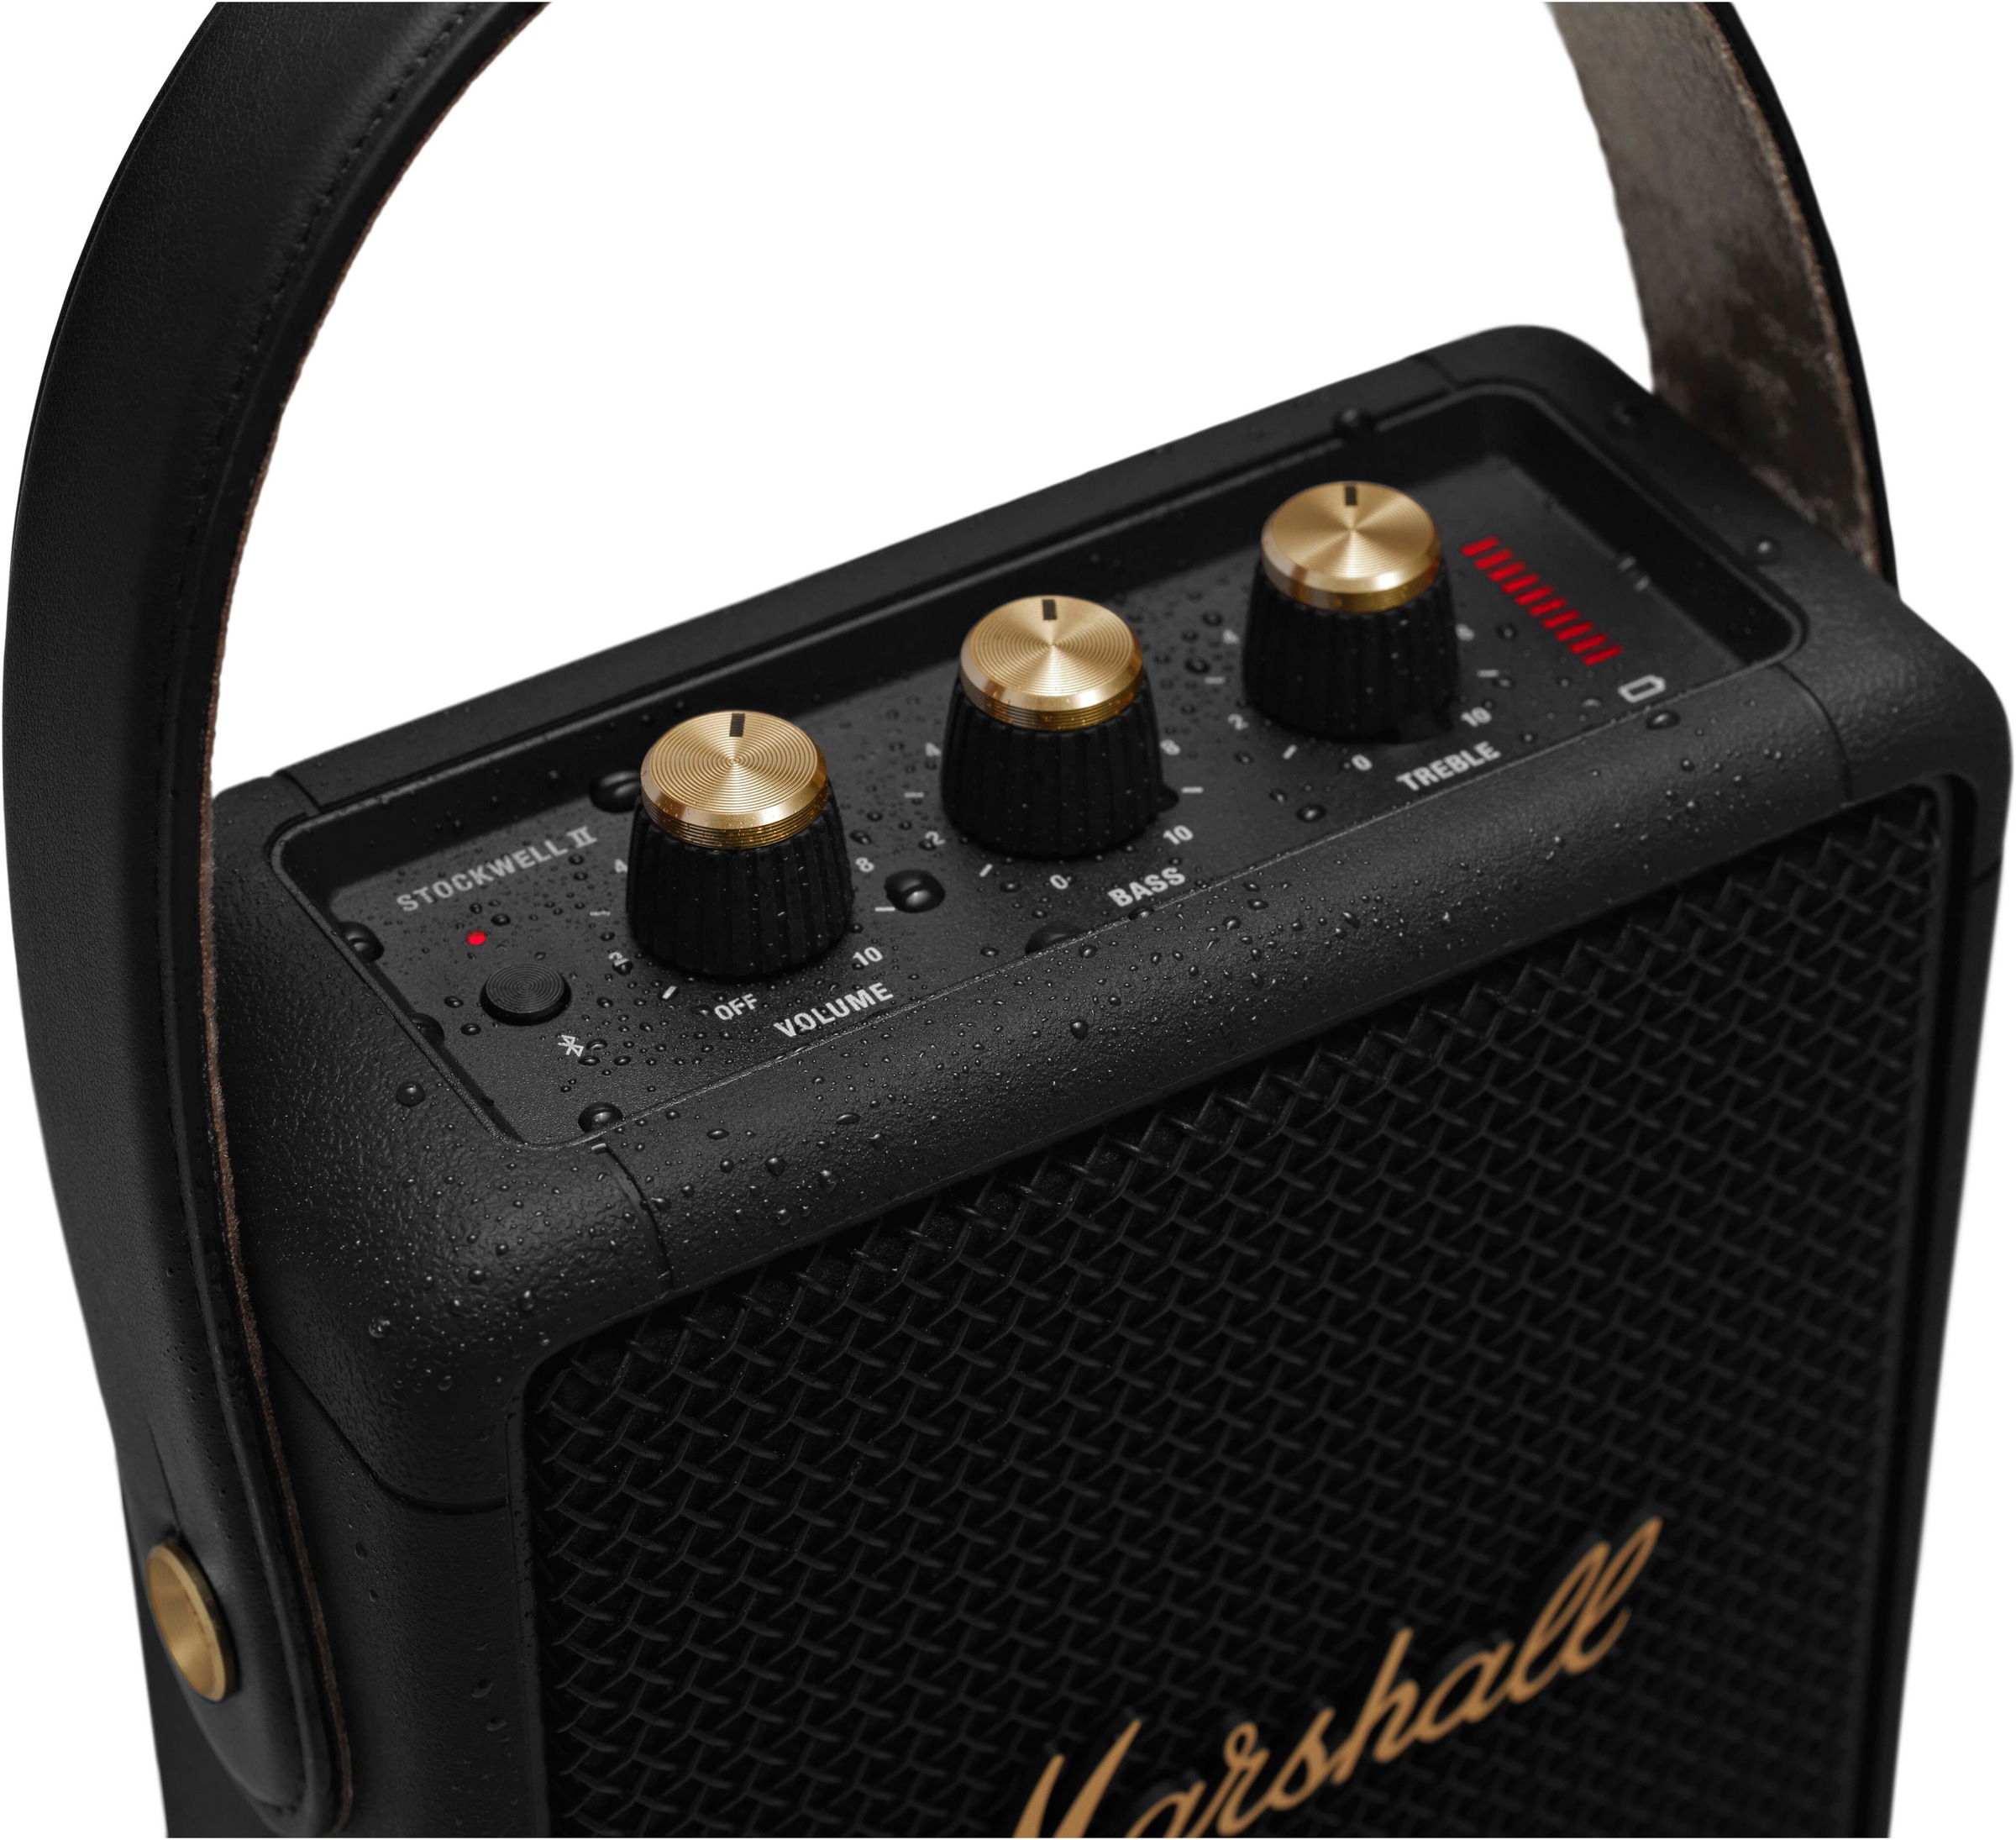 Marshall Portable-Lautsprecher »Stockwell II«